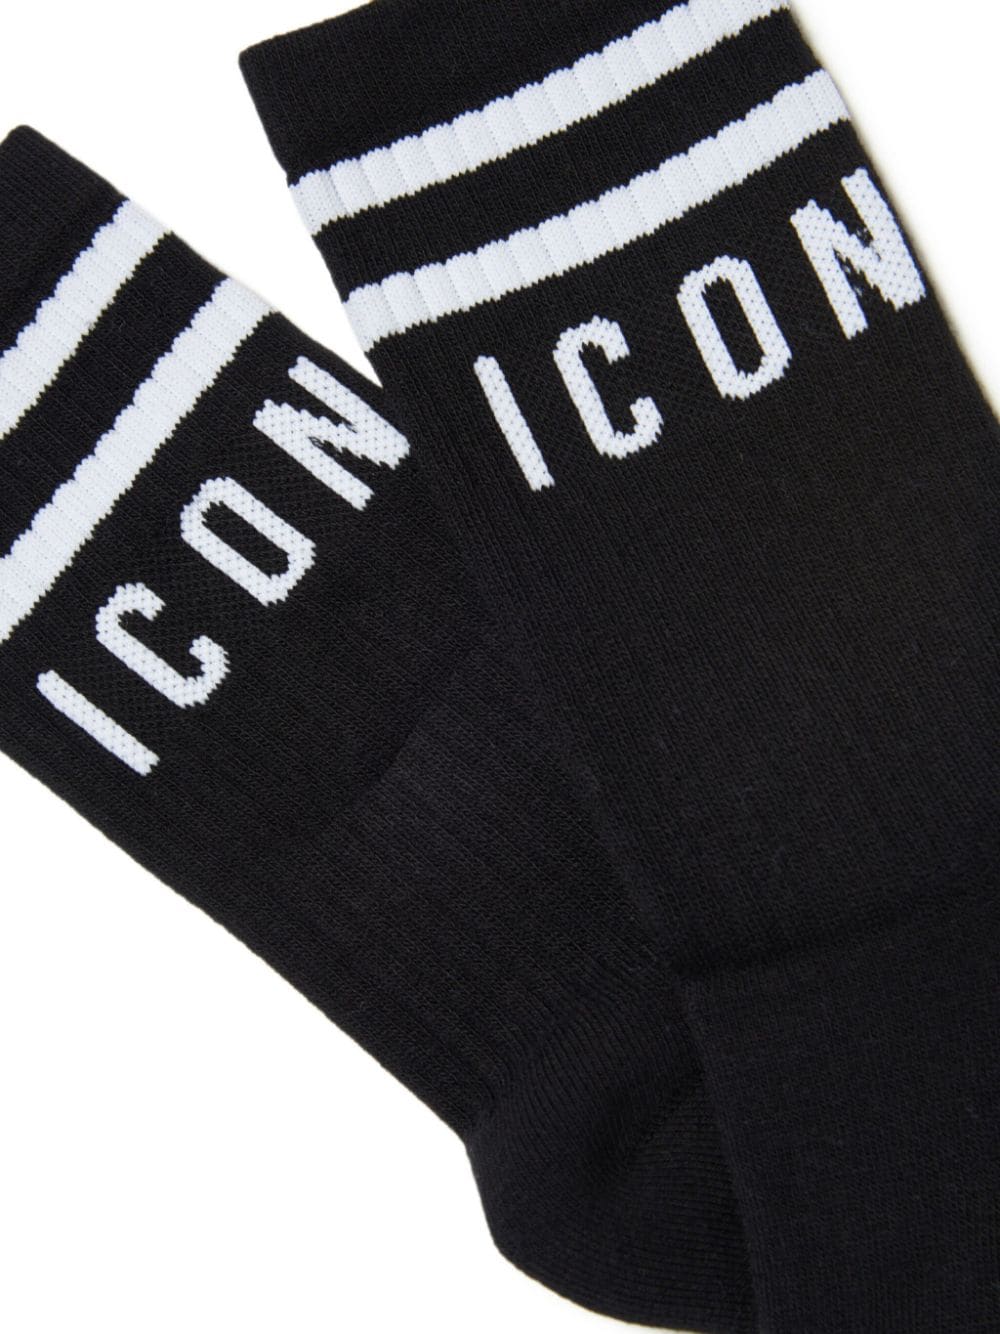 Black socks with white ICON print